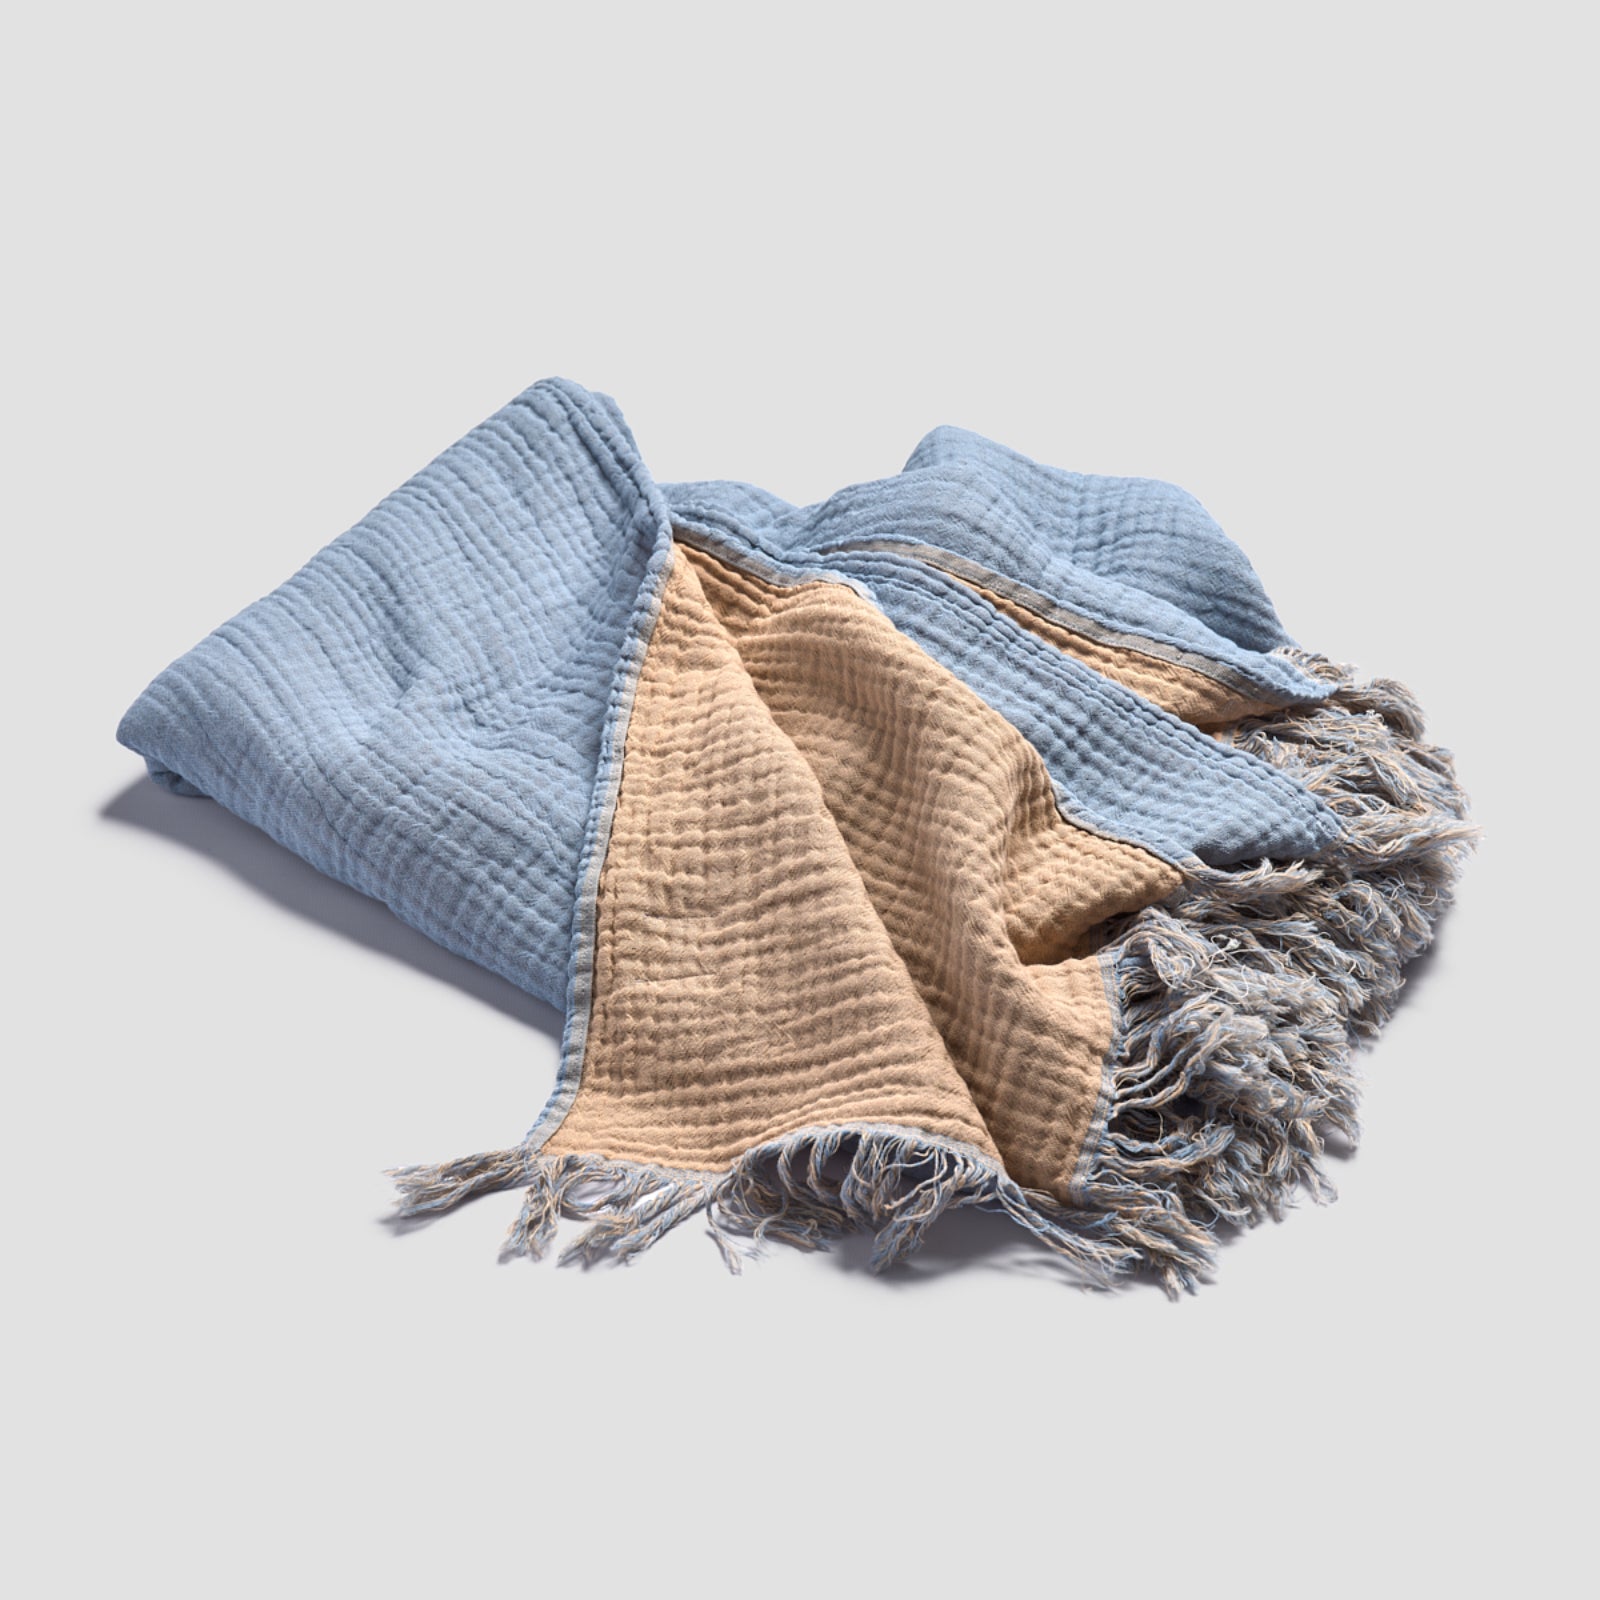 Warm Blue & Café au Lait Textured Cotton Throw - Piglet in Bed